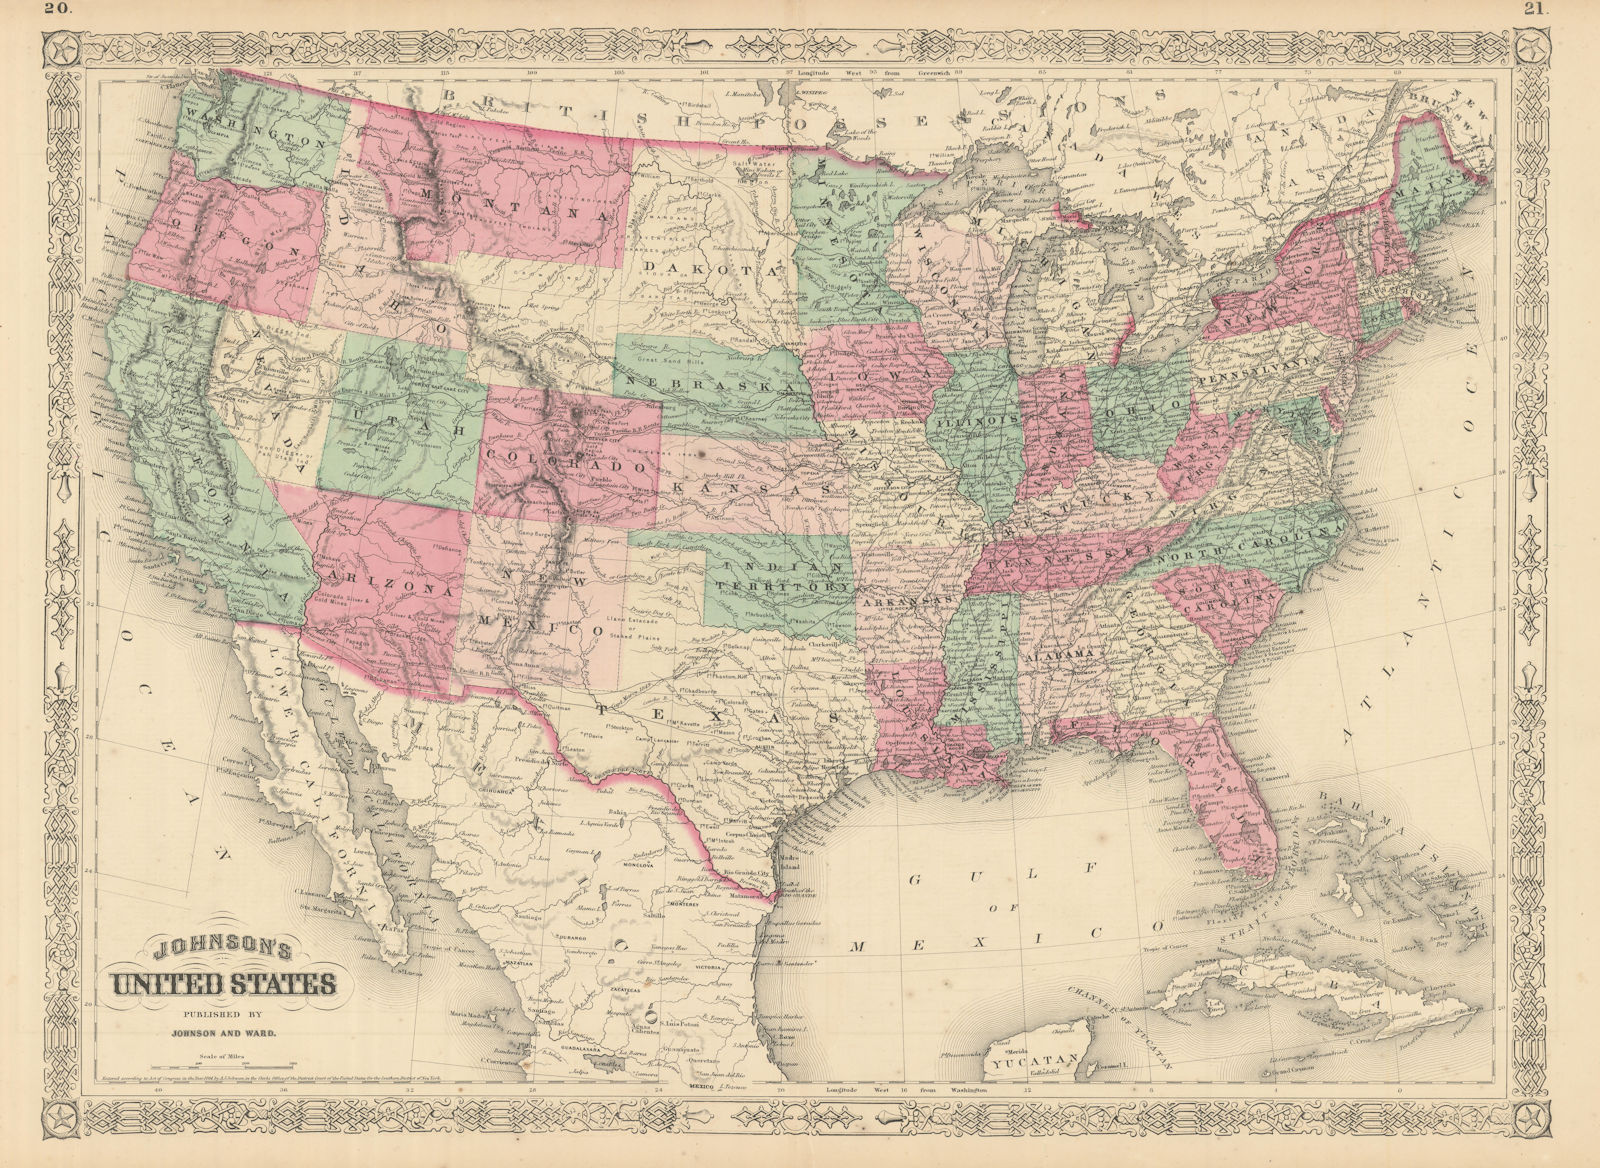 Johnson's United States. Wyoming part of Dakota Territory 1866 old antique map